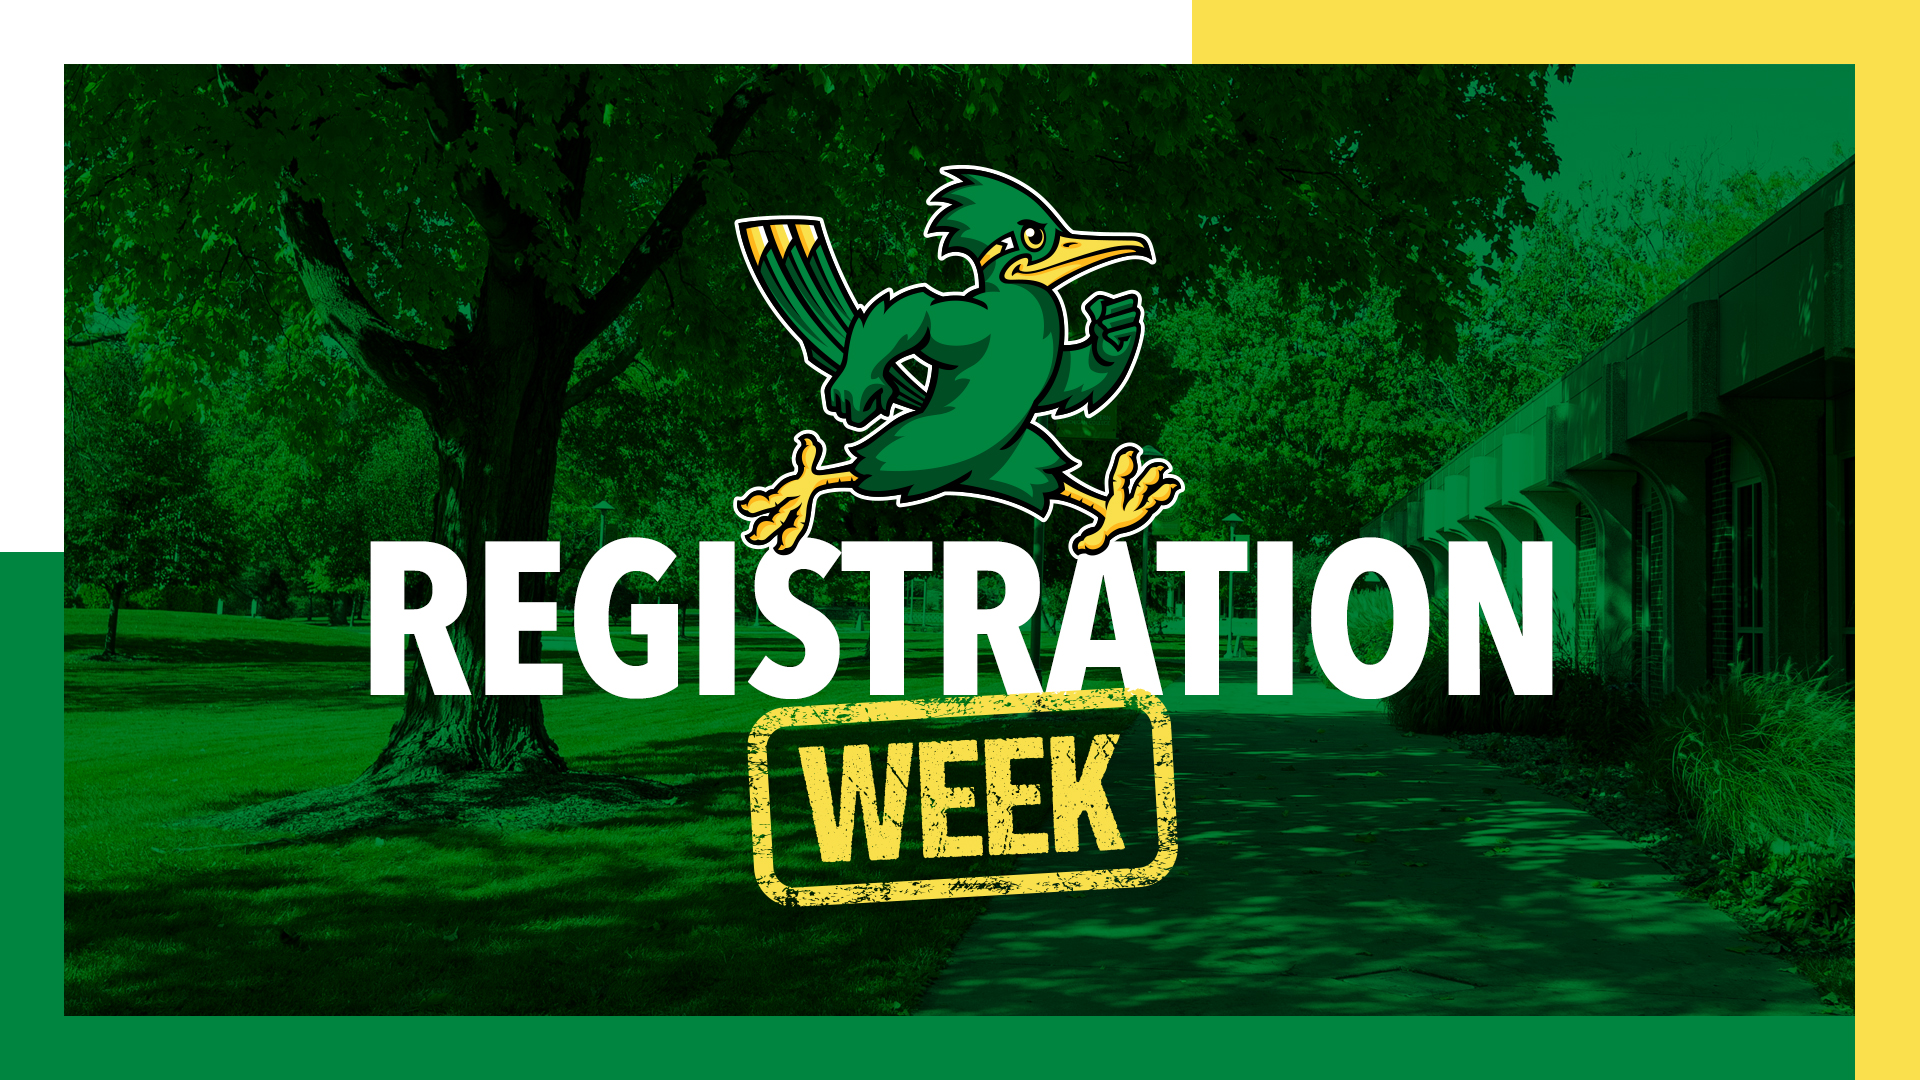 Registration Week